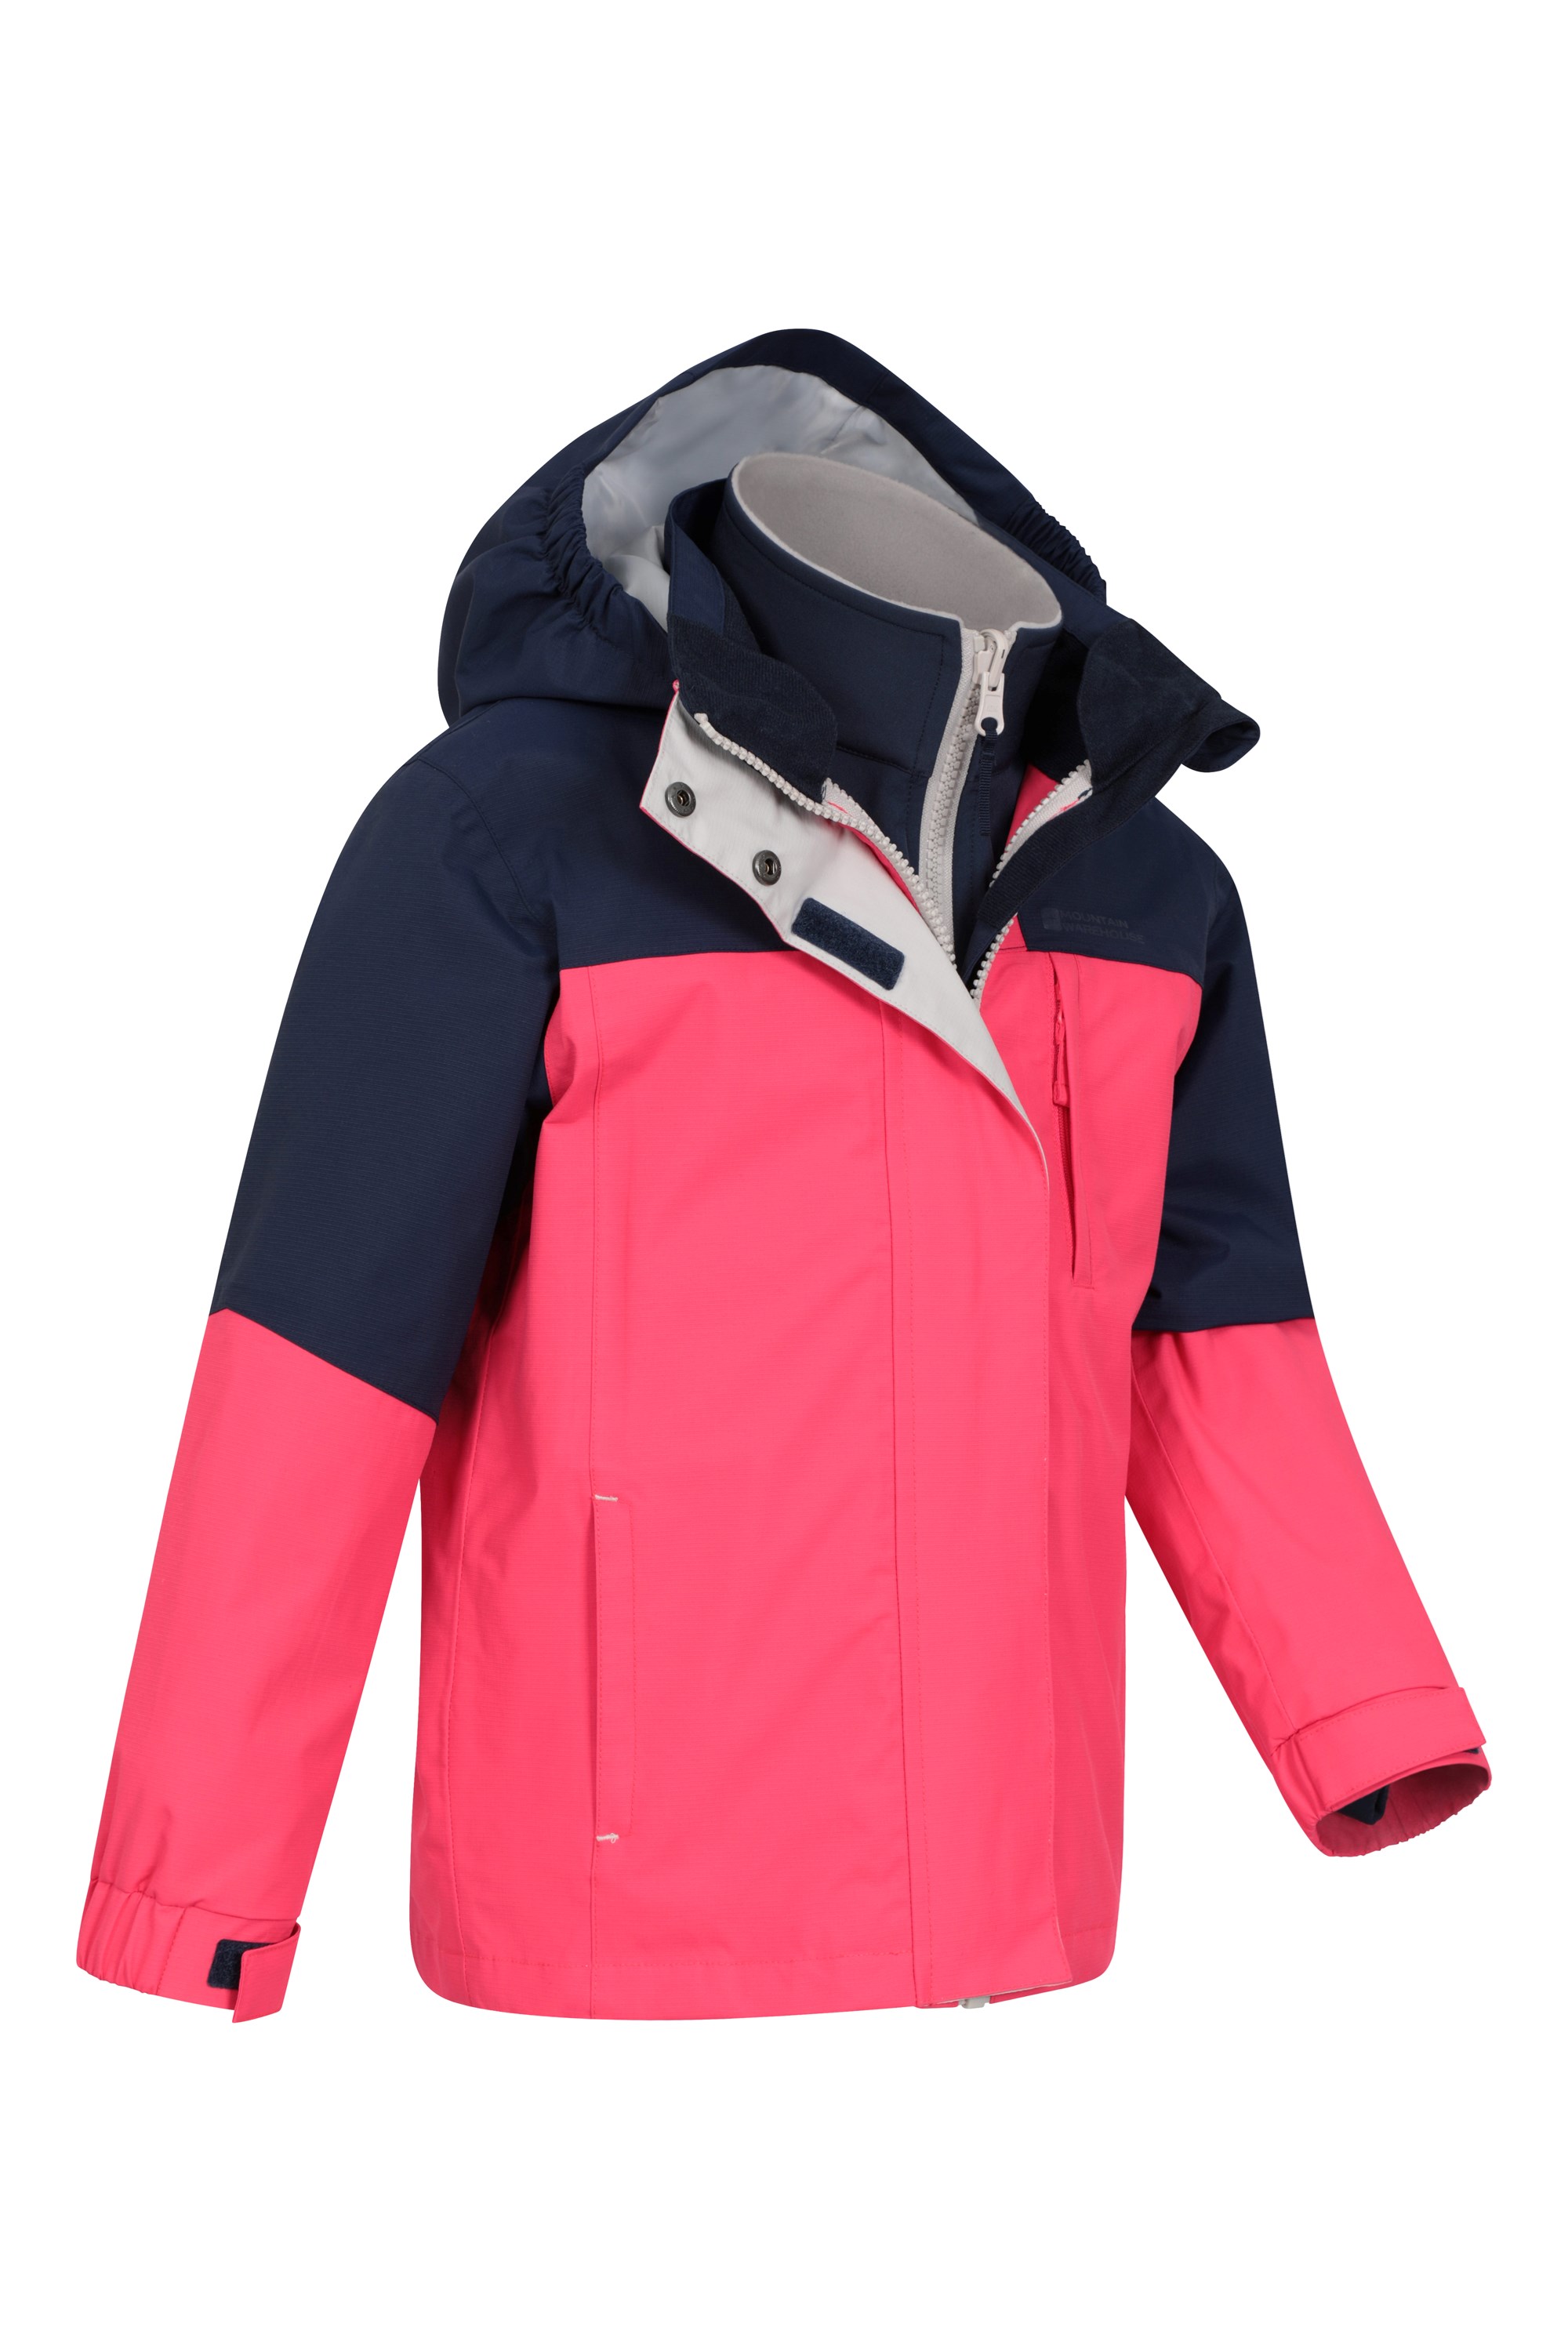 Details about   Mountain Warehouse Samuel Kids Jacket Water Resistant Boys Girls Parka Coat 